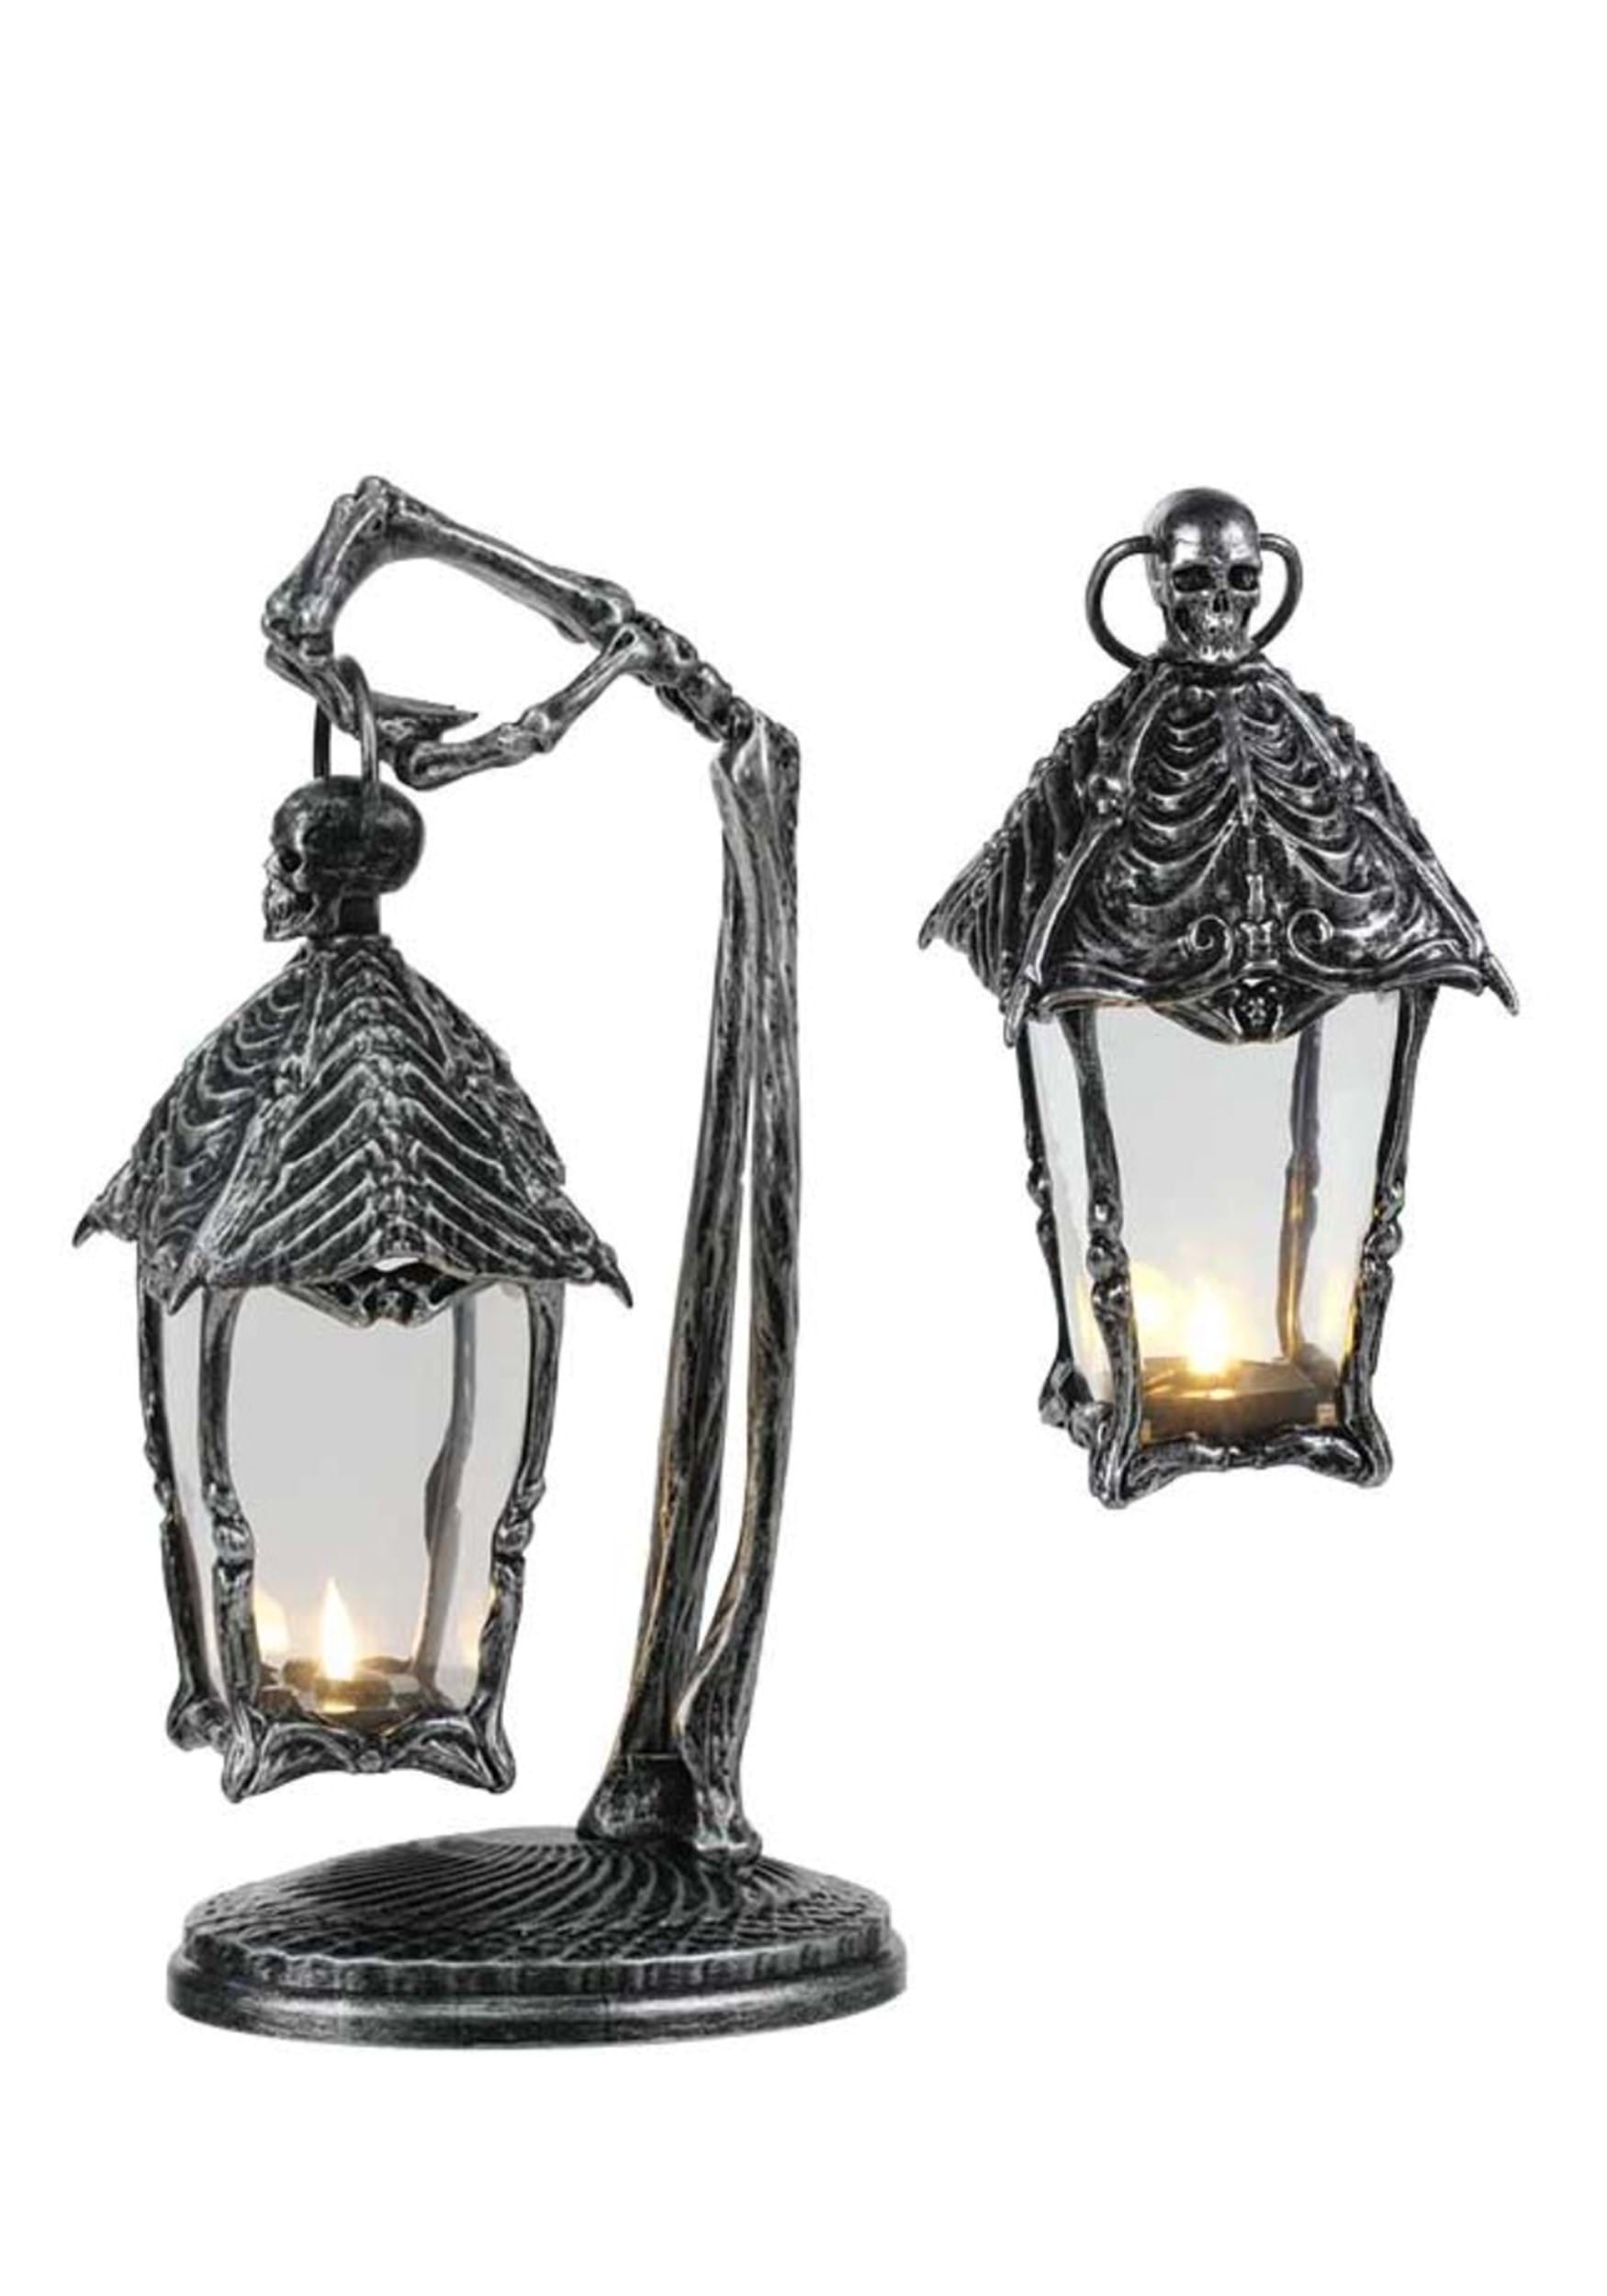 12″ Gothic Lantern Decoration